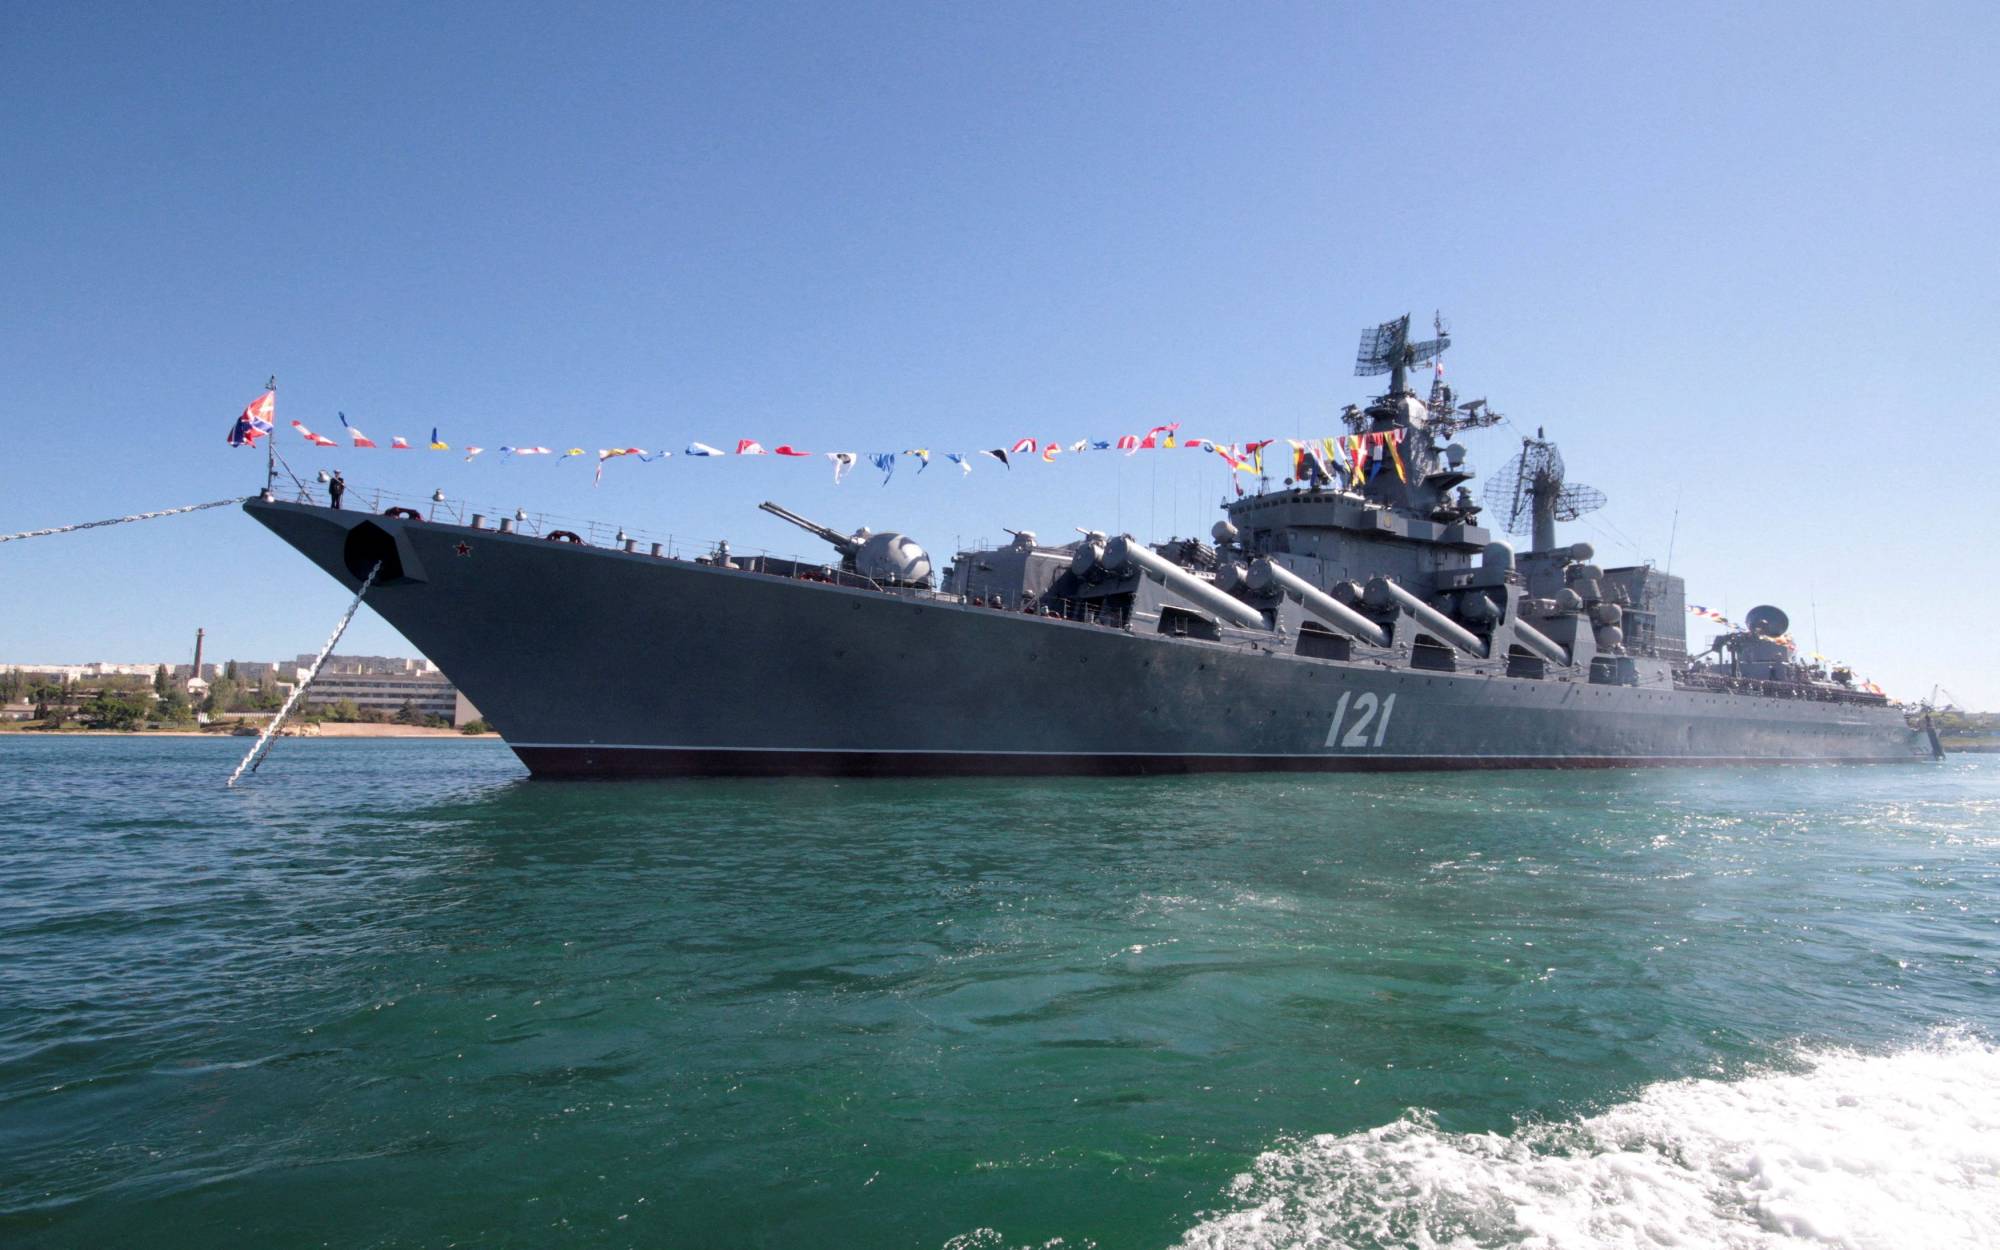 Russian missile cruiser Moskva moored in the Ukrainian Black Sea port of Sevastopol, Ukraine, in 2013 | REUTERS